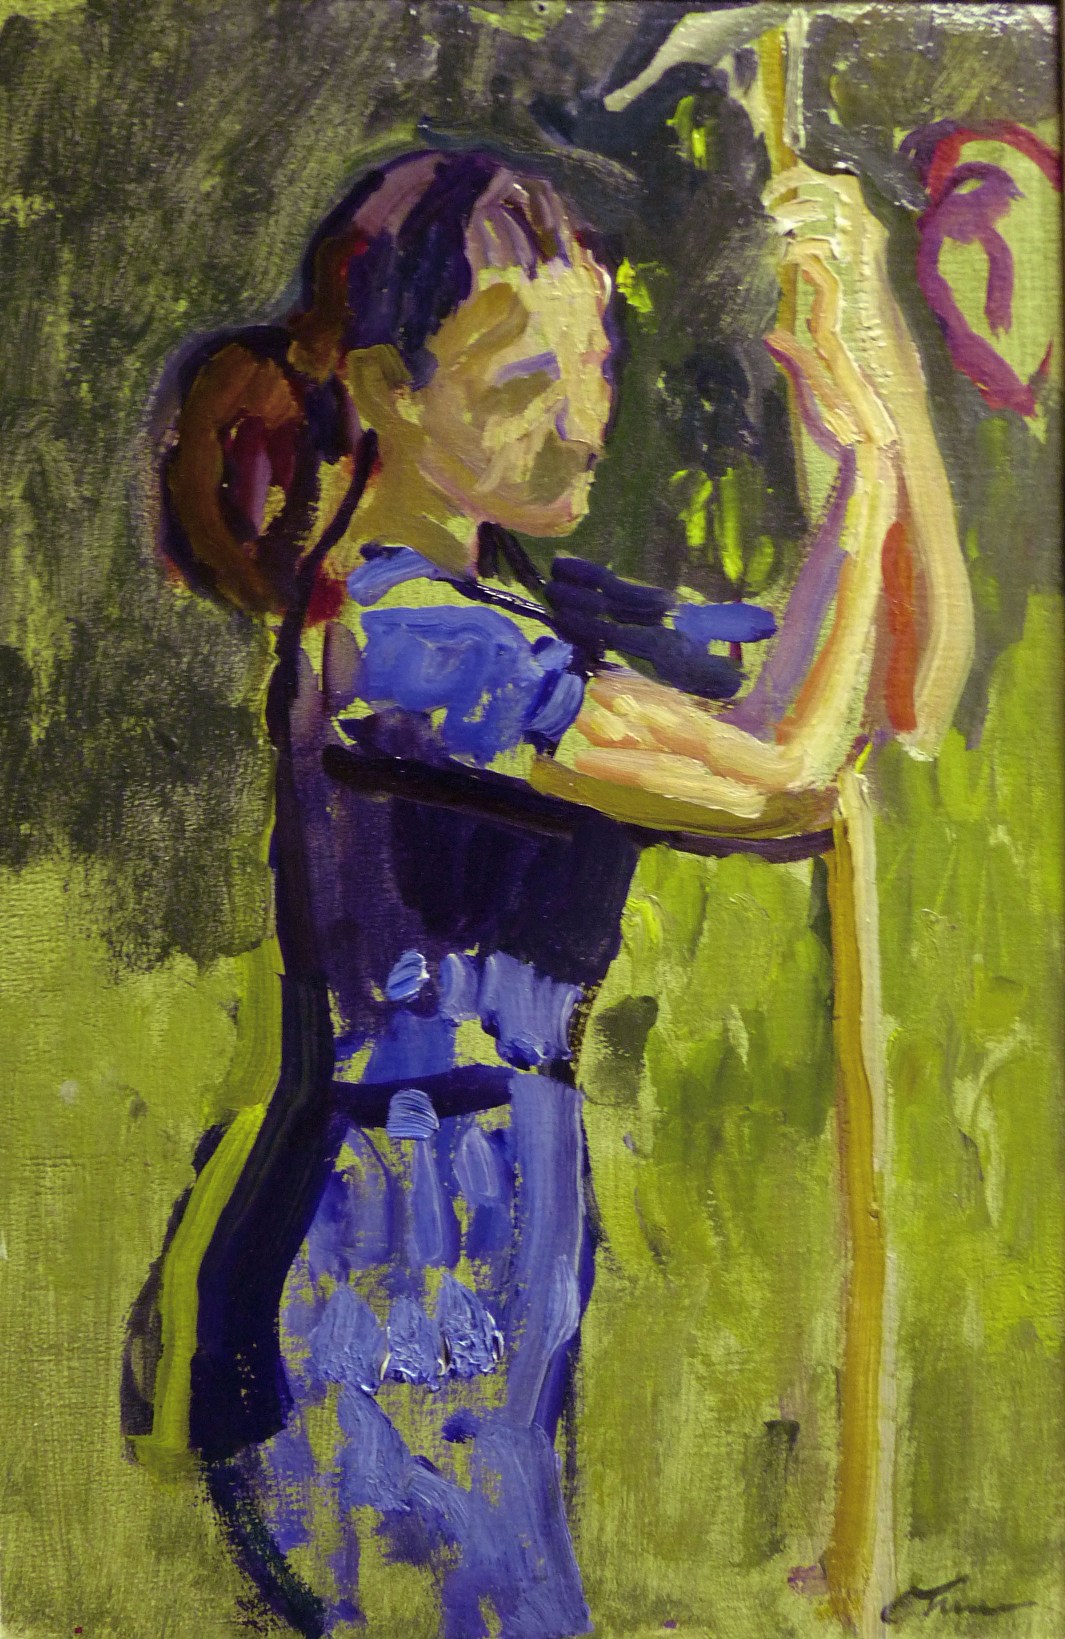 Tkacev, Russian painting, girl